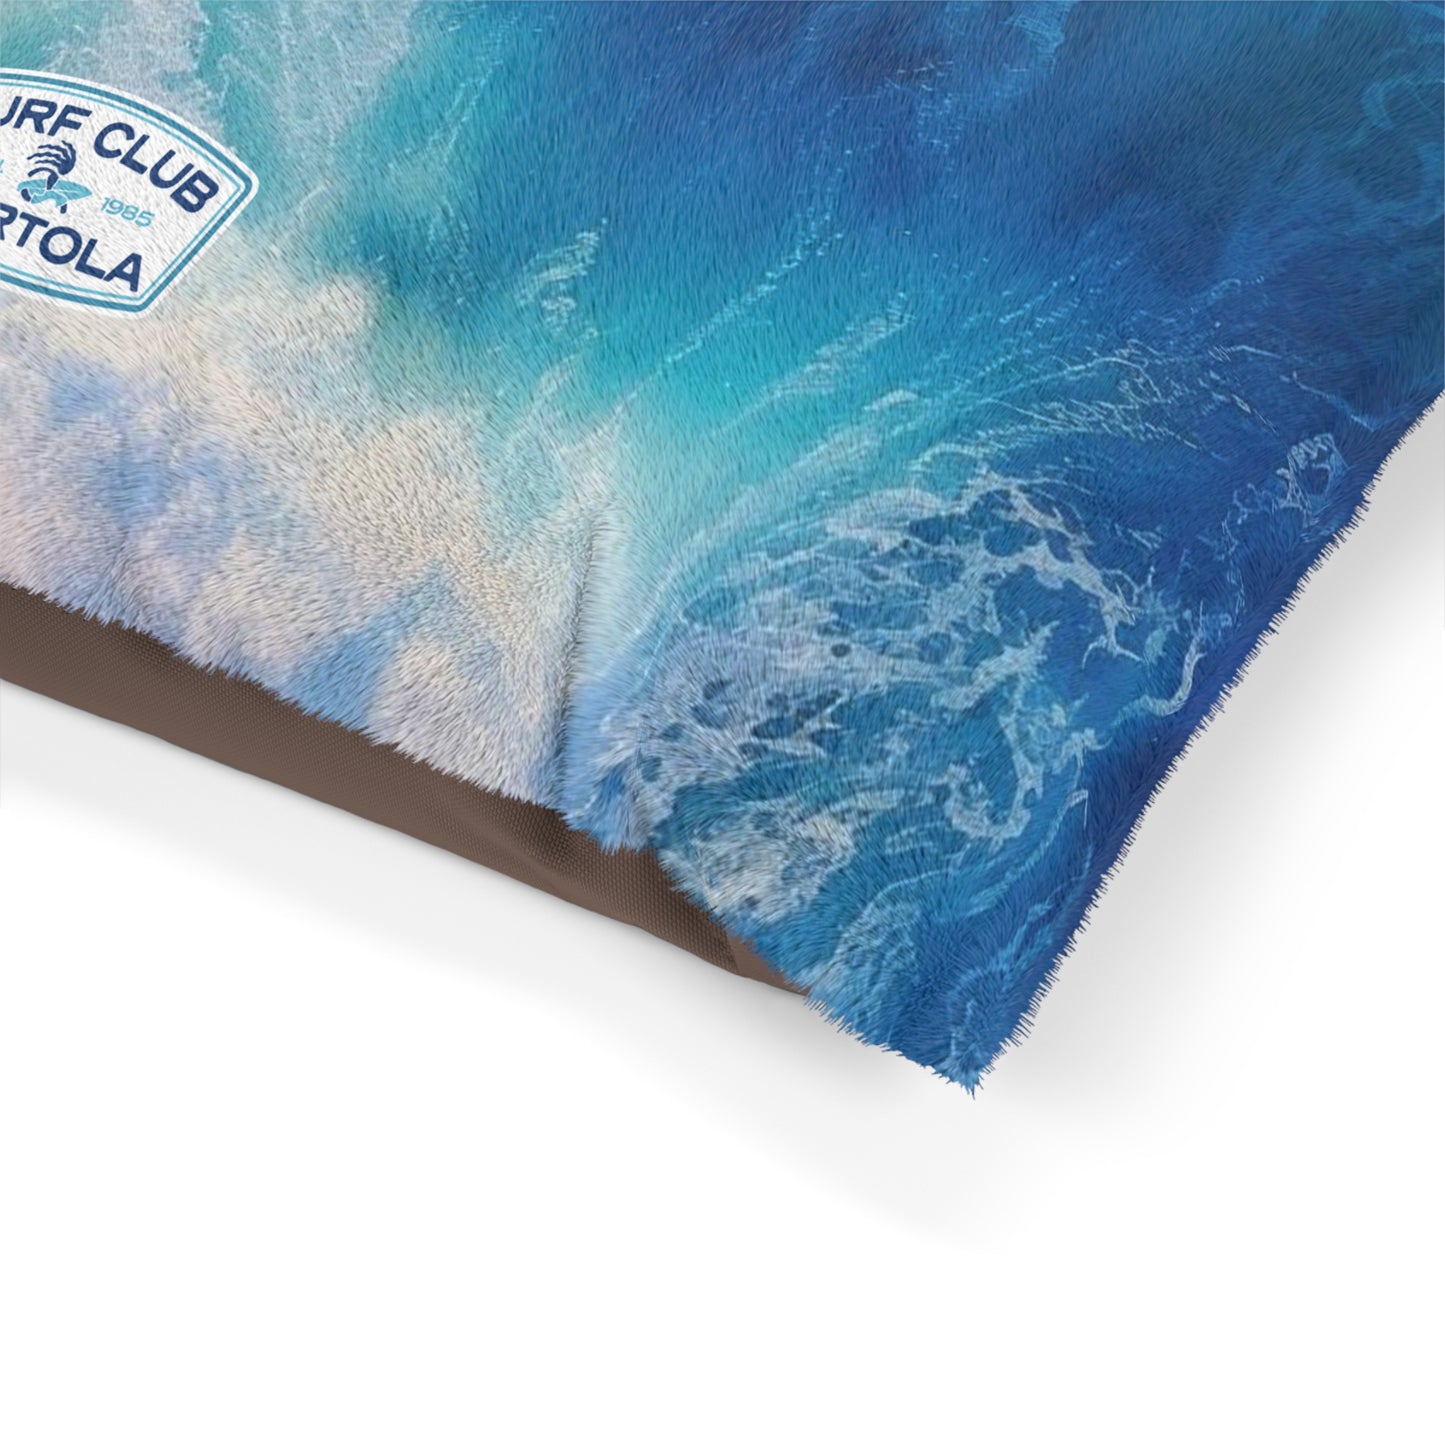 "Surf Club Tortola" Pet Bed